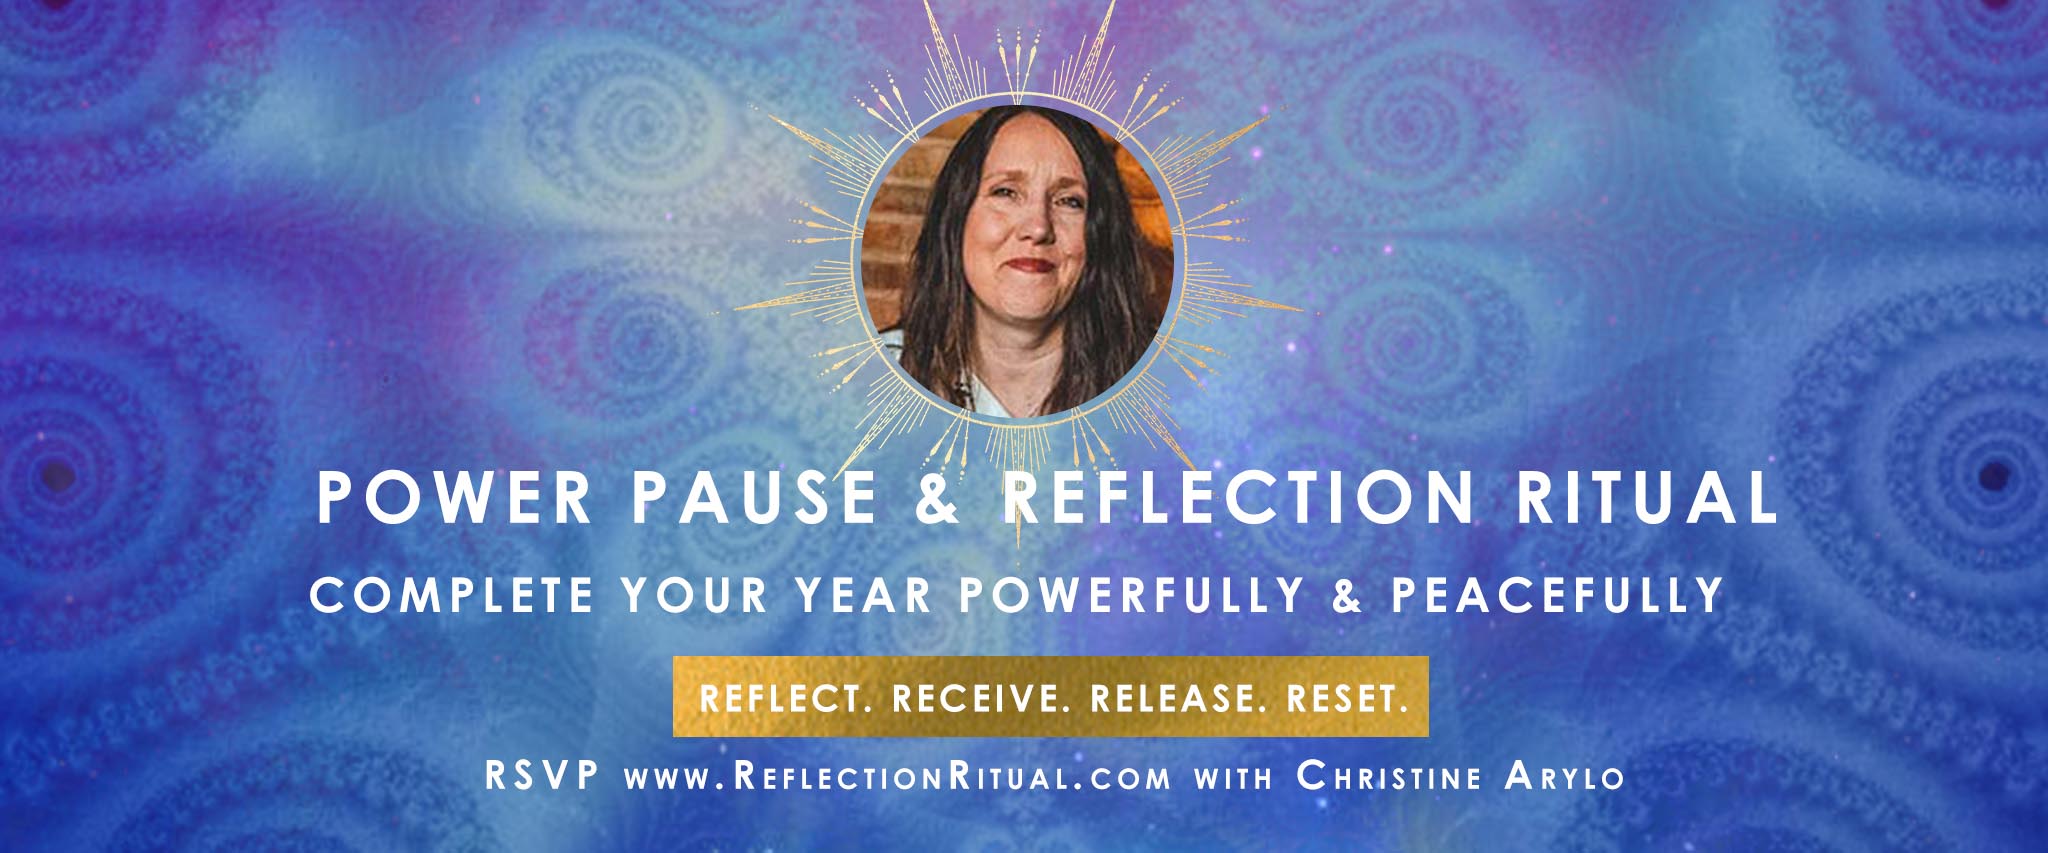 Year End Reflection Ritual Christine Arylo